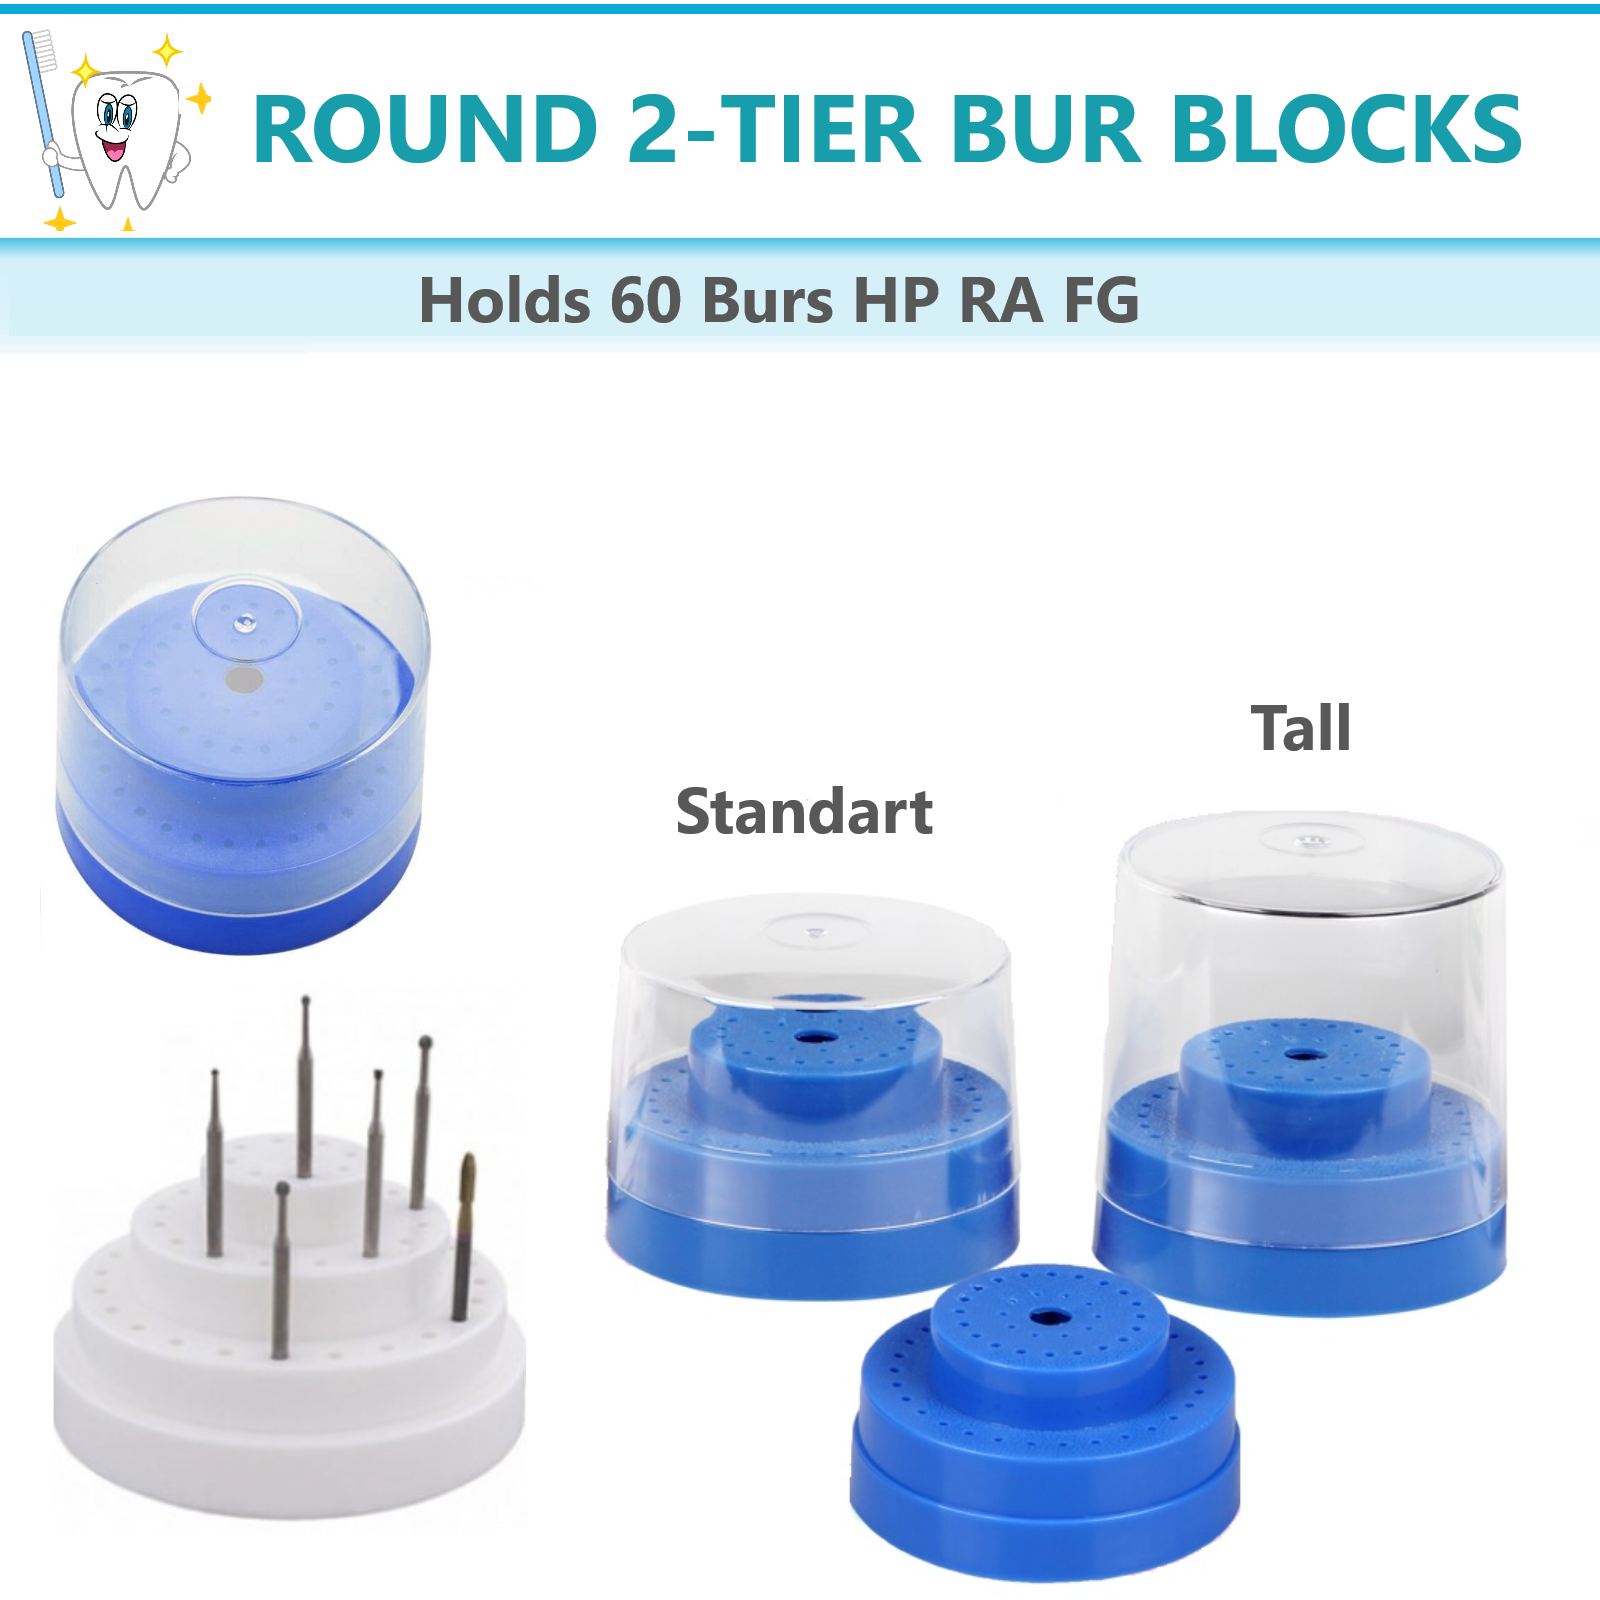 Plasdent Round 2-Tier Bur Blocks